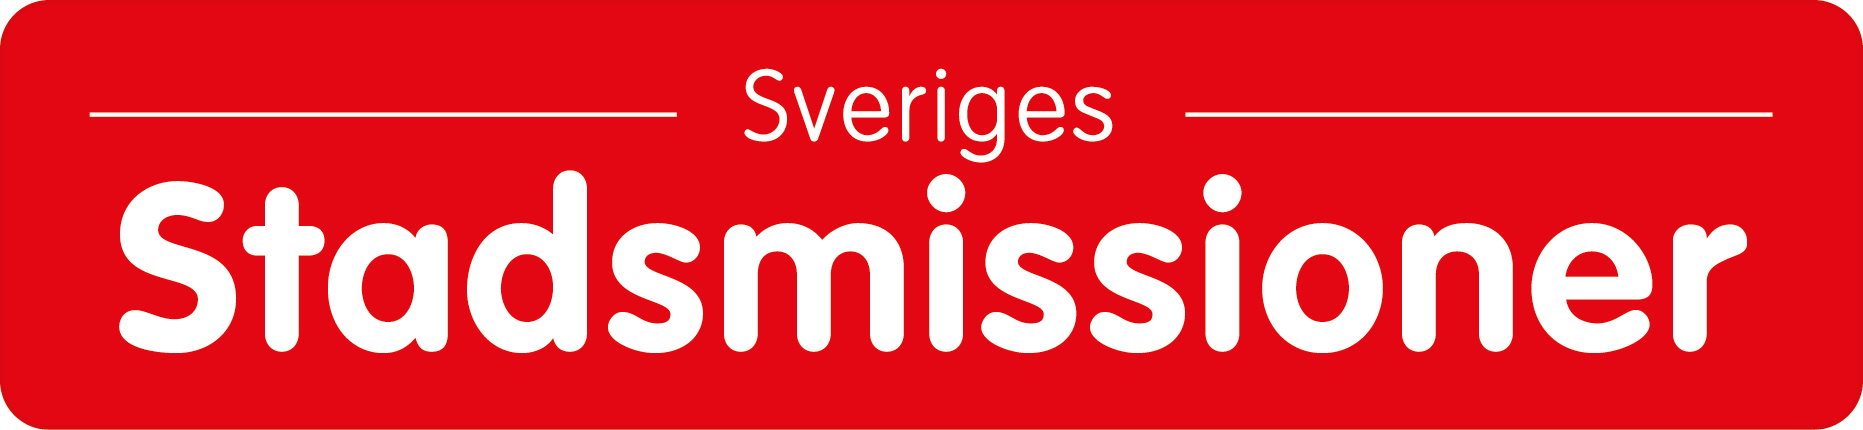 Sveriges Stadsmissioners logga